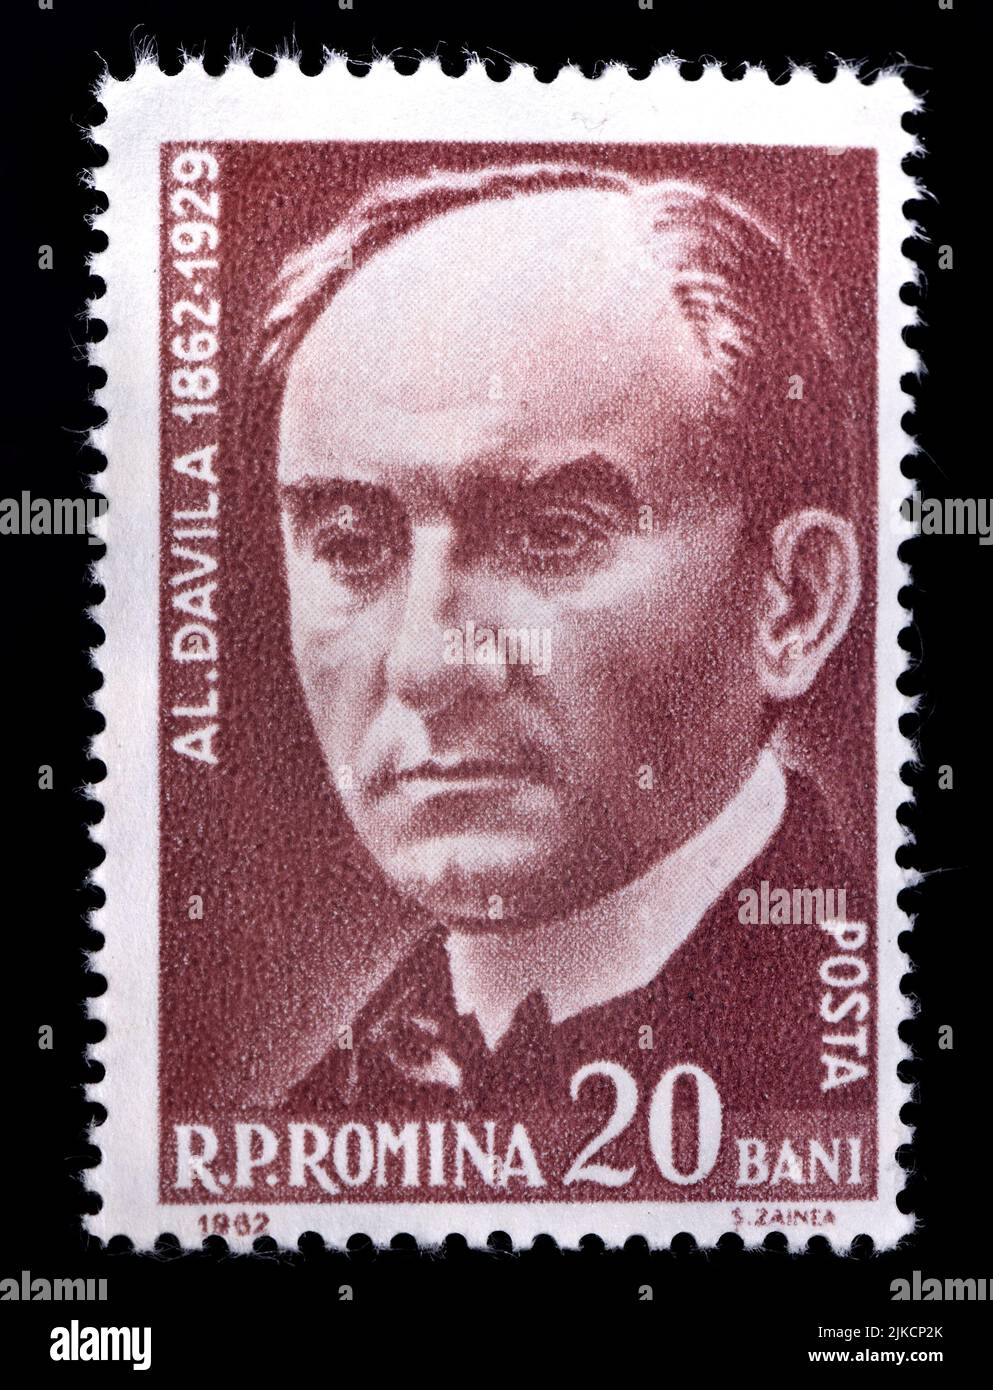 Romanian postage stamp (1962) : Alexandru Davila (1862-1929) Romanian dramatist, diplomat, public administrator, and diarist Stock Photo